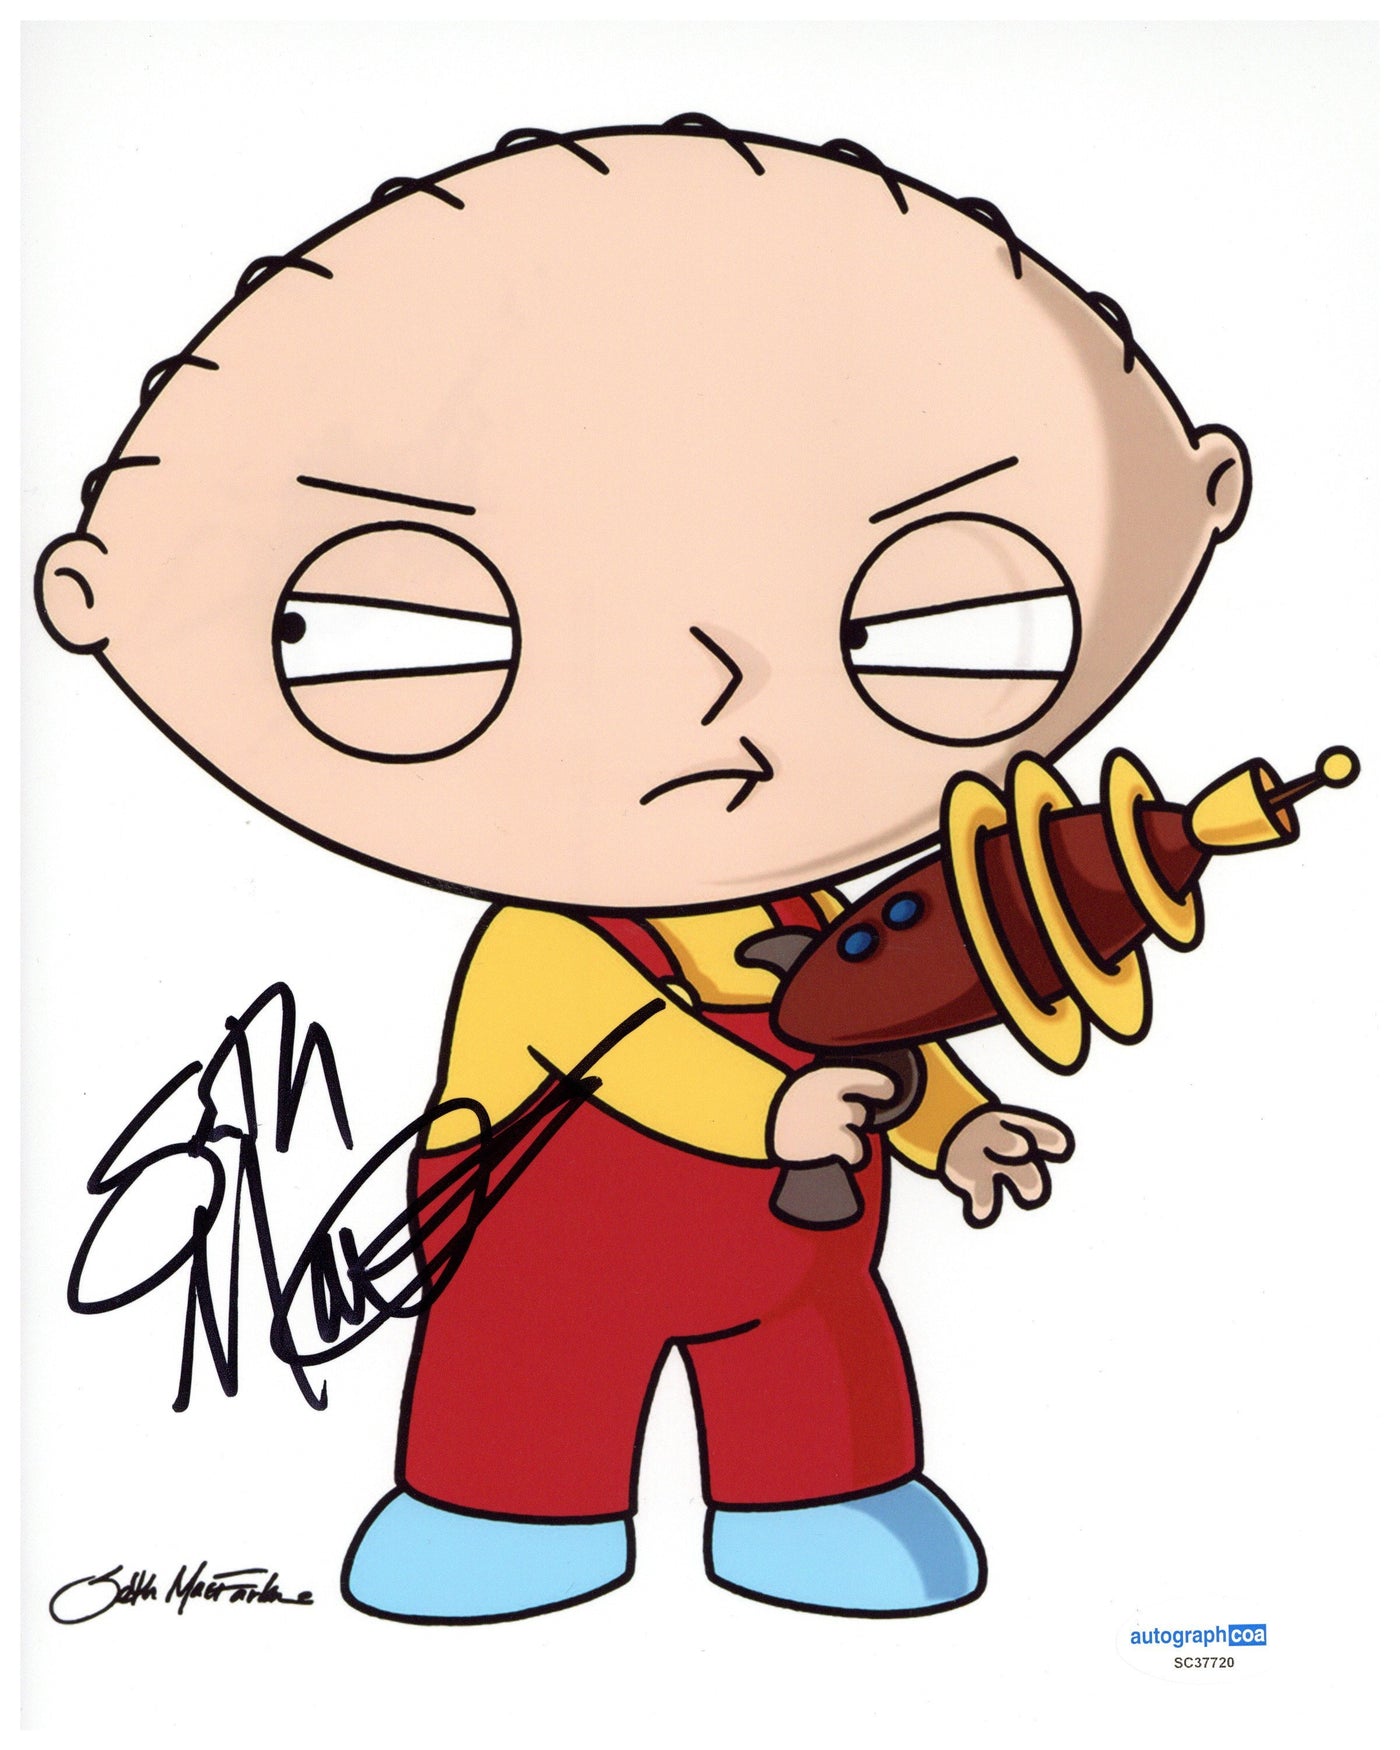 Seth MacFarlane Signed 8x10 Photo Family Guy Authentic Autographed ACOA